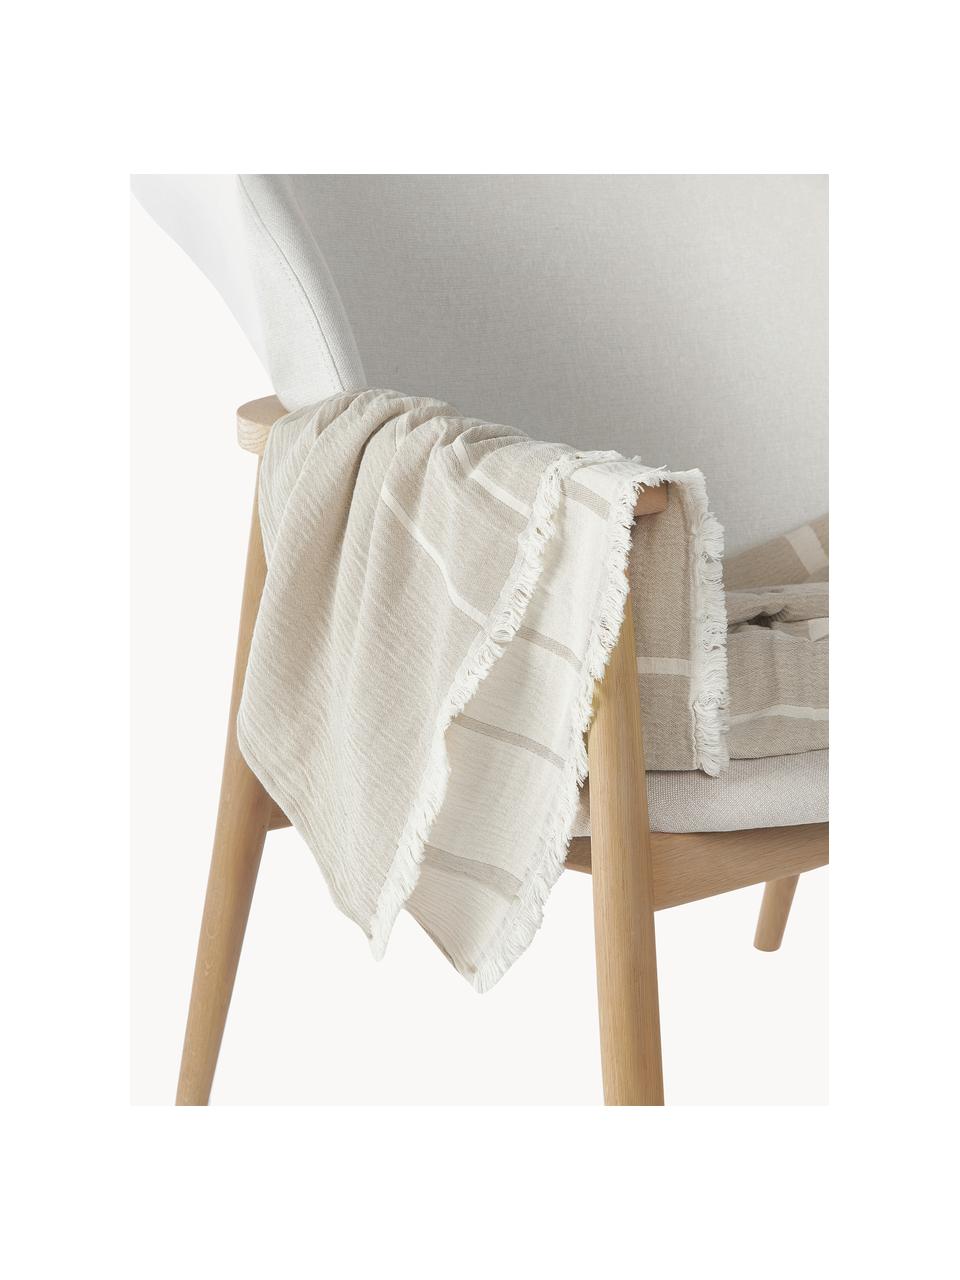 Colcha doble cara de algodón Architecture, 100% algodón, Beige claro, blanco crema, An 130 x Al 180 cm